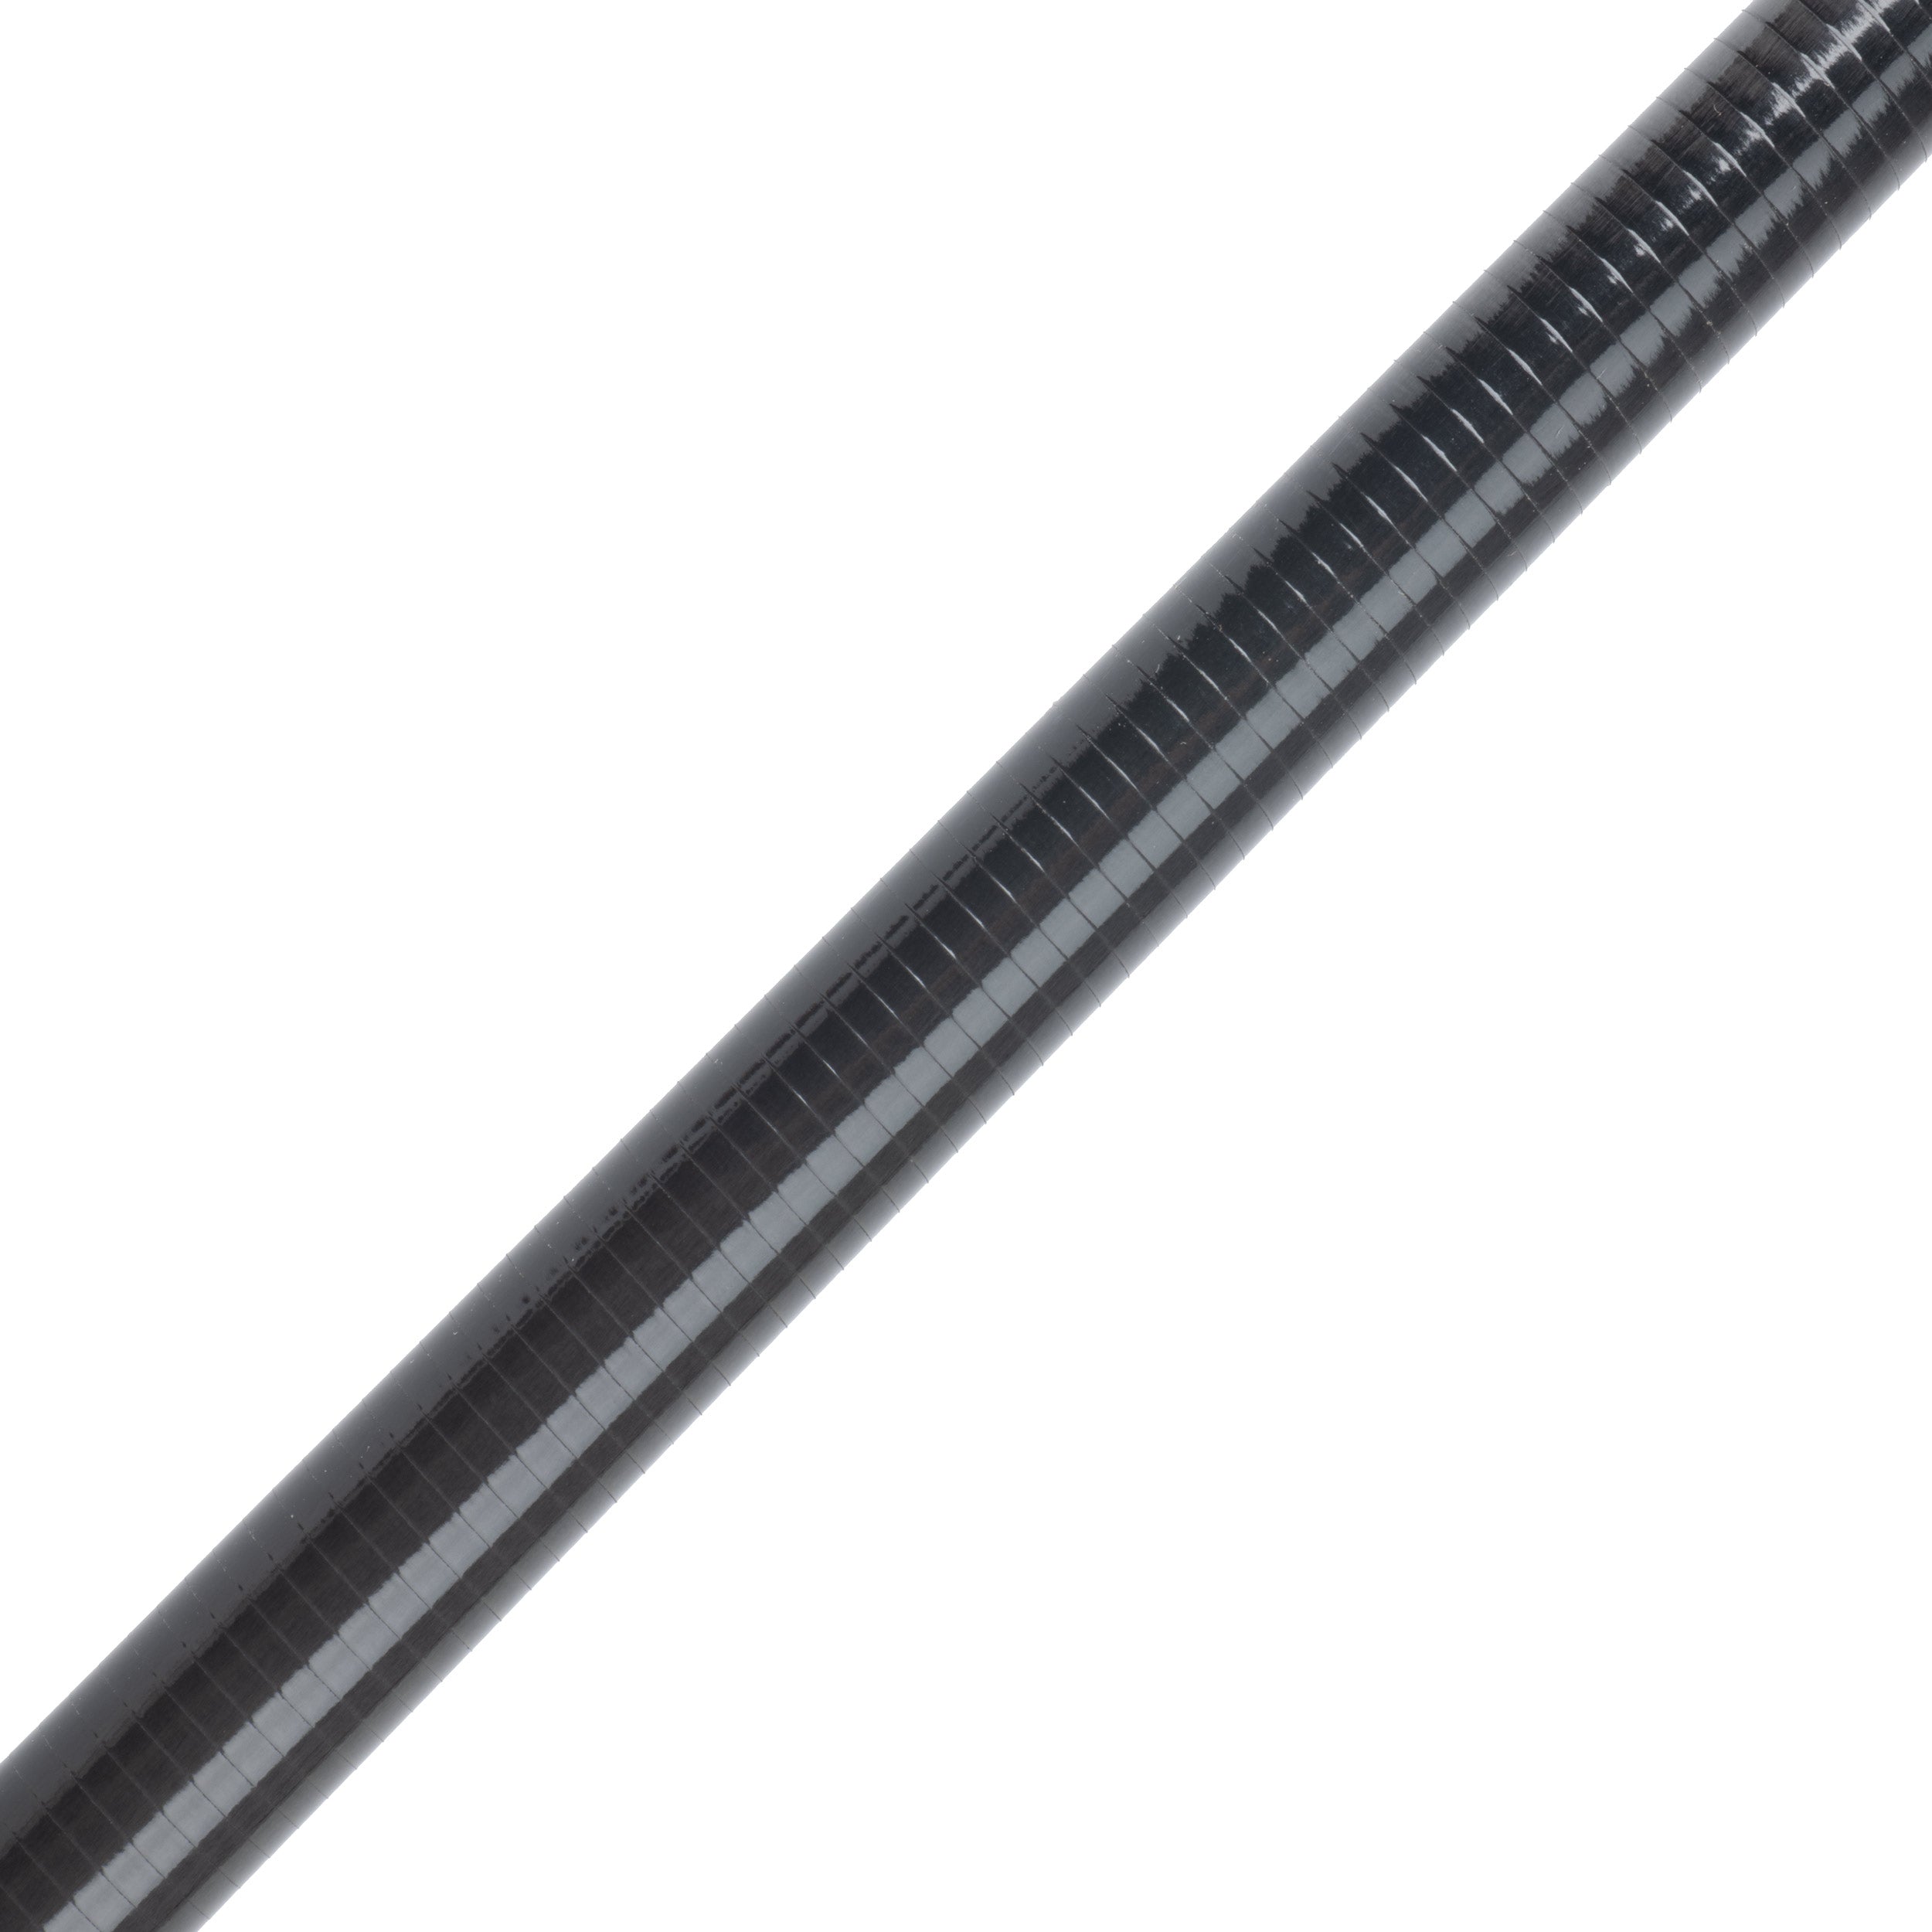 Cashion CR6r Carbon Fiber All-Purpose Rod Blank - CR6r-iFS904